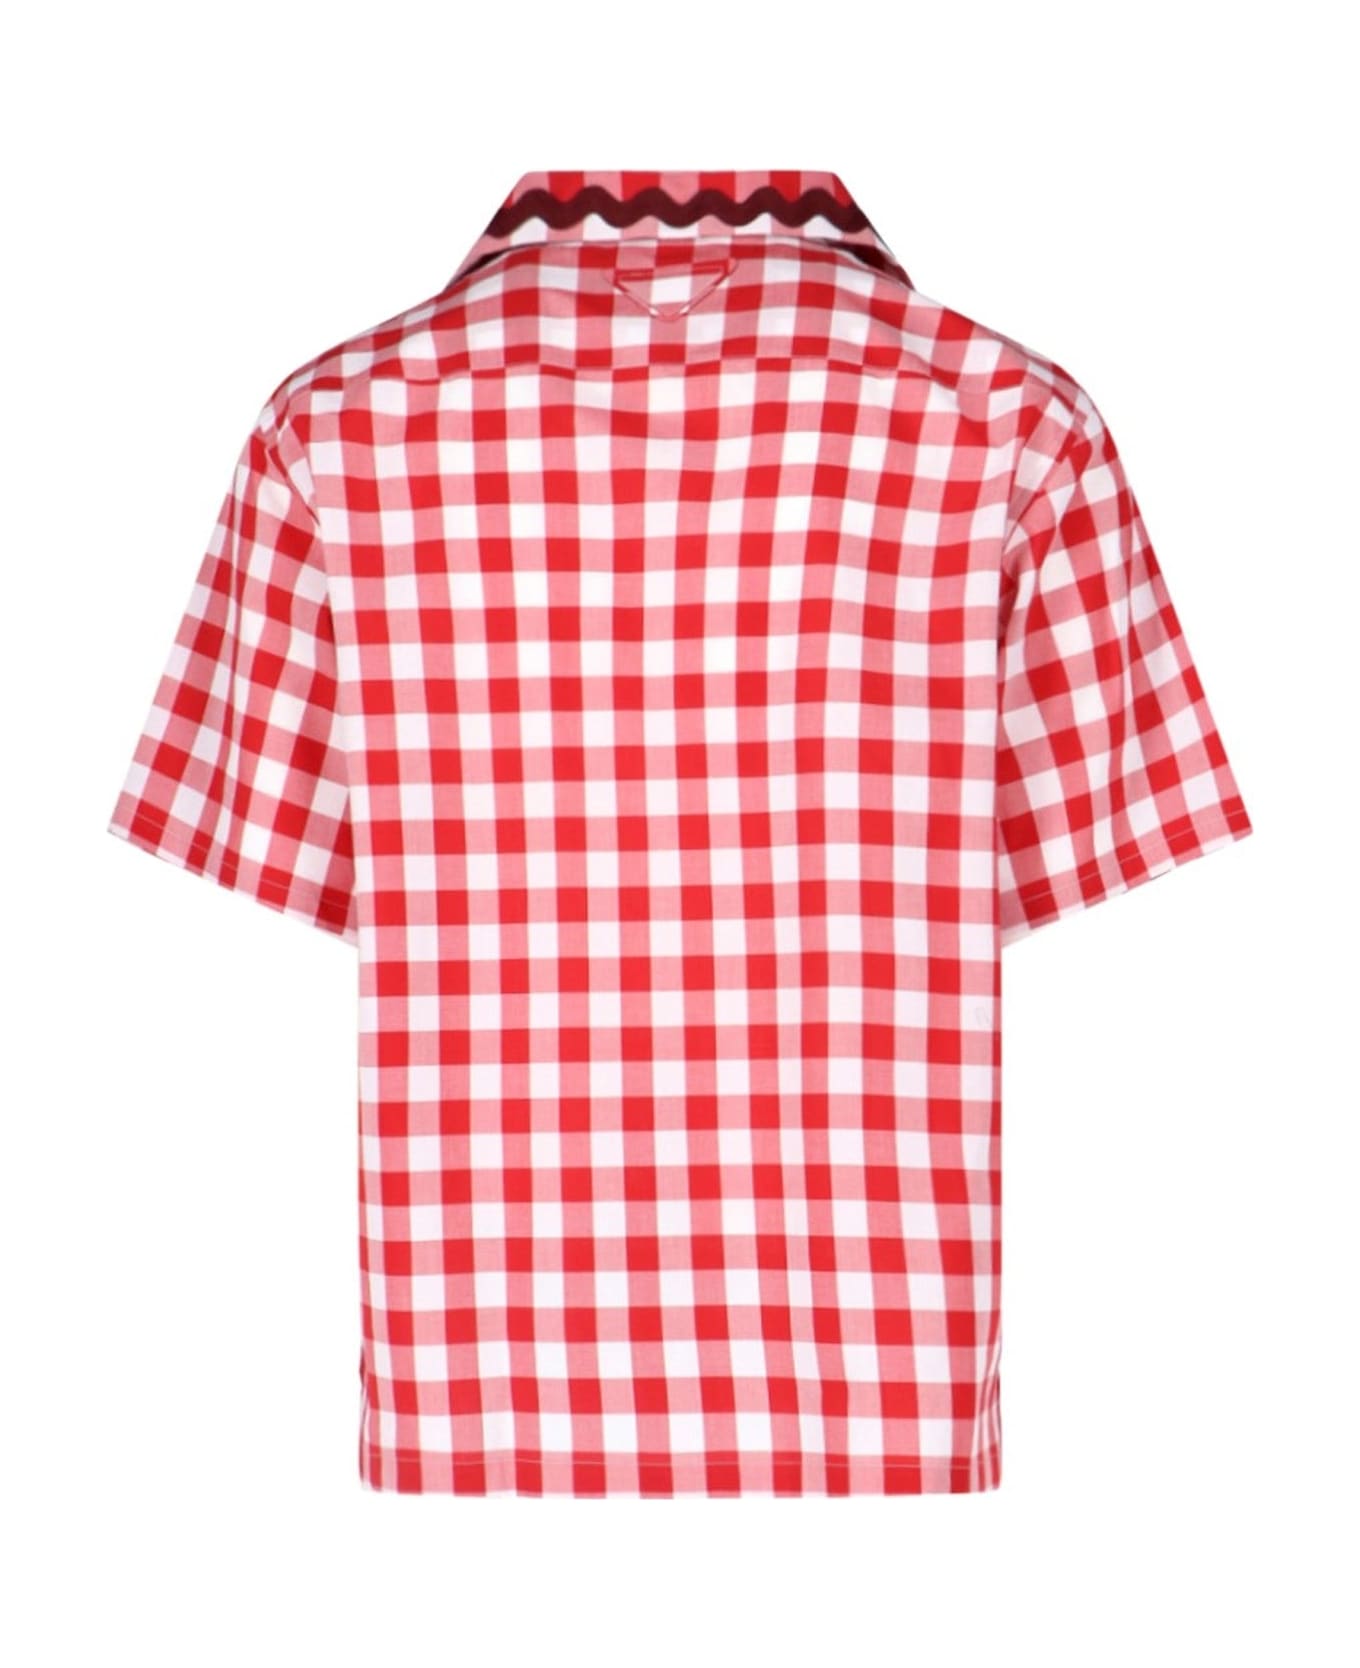 Prada Checked Shirt - Red